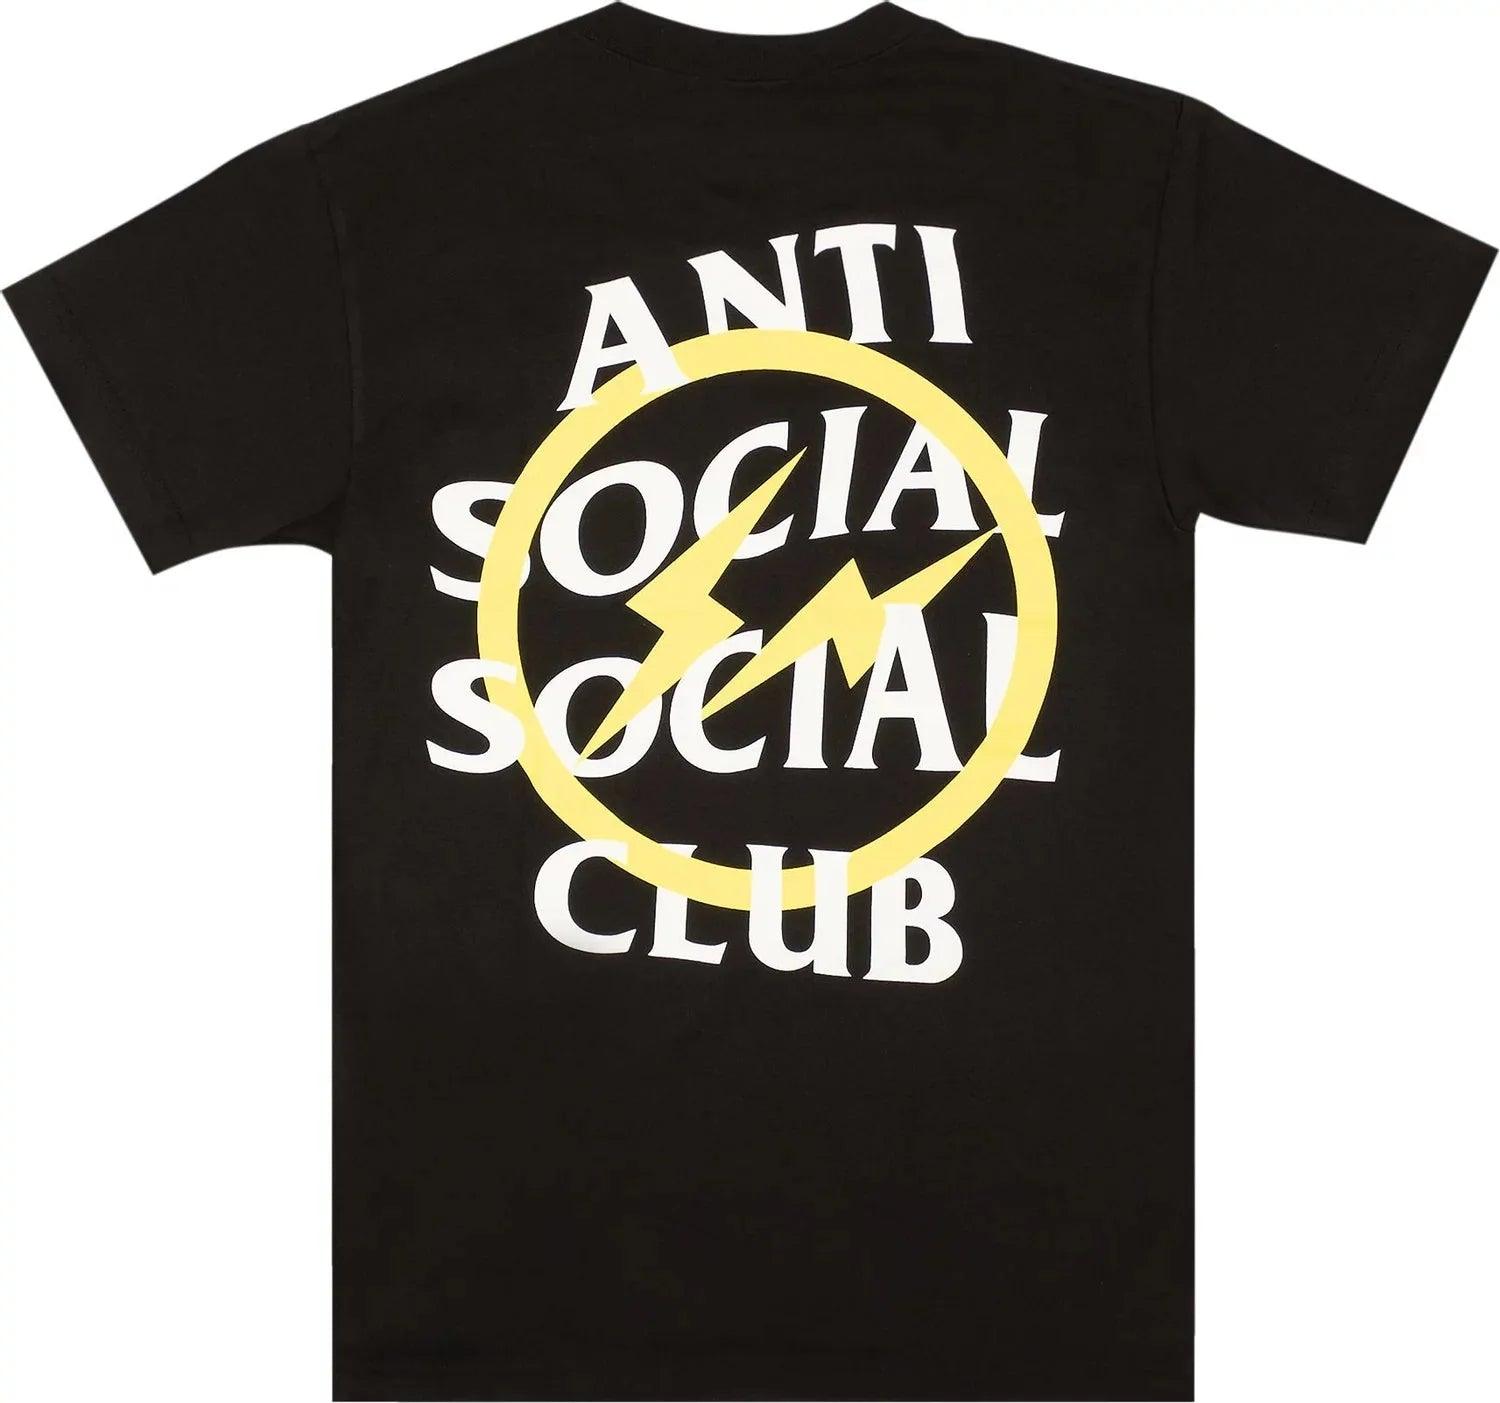 Buy ANTI SOCIAL SOCIAL CLUB – dawntown